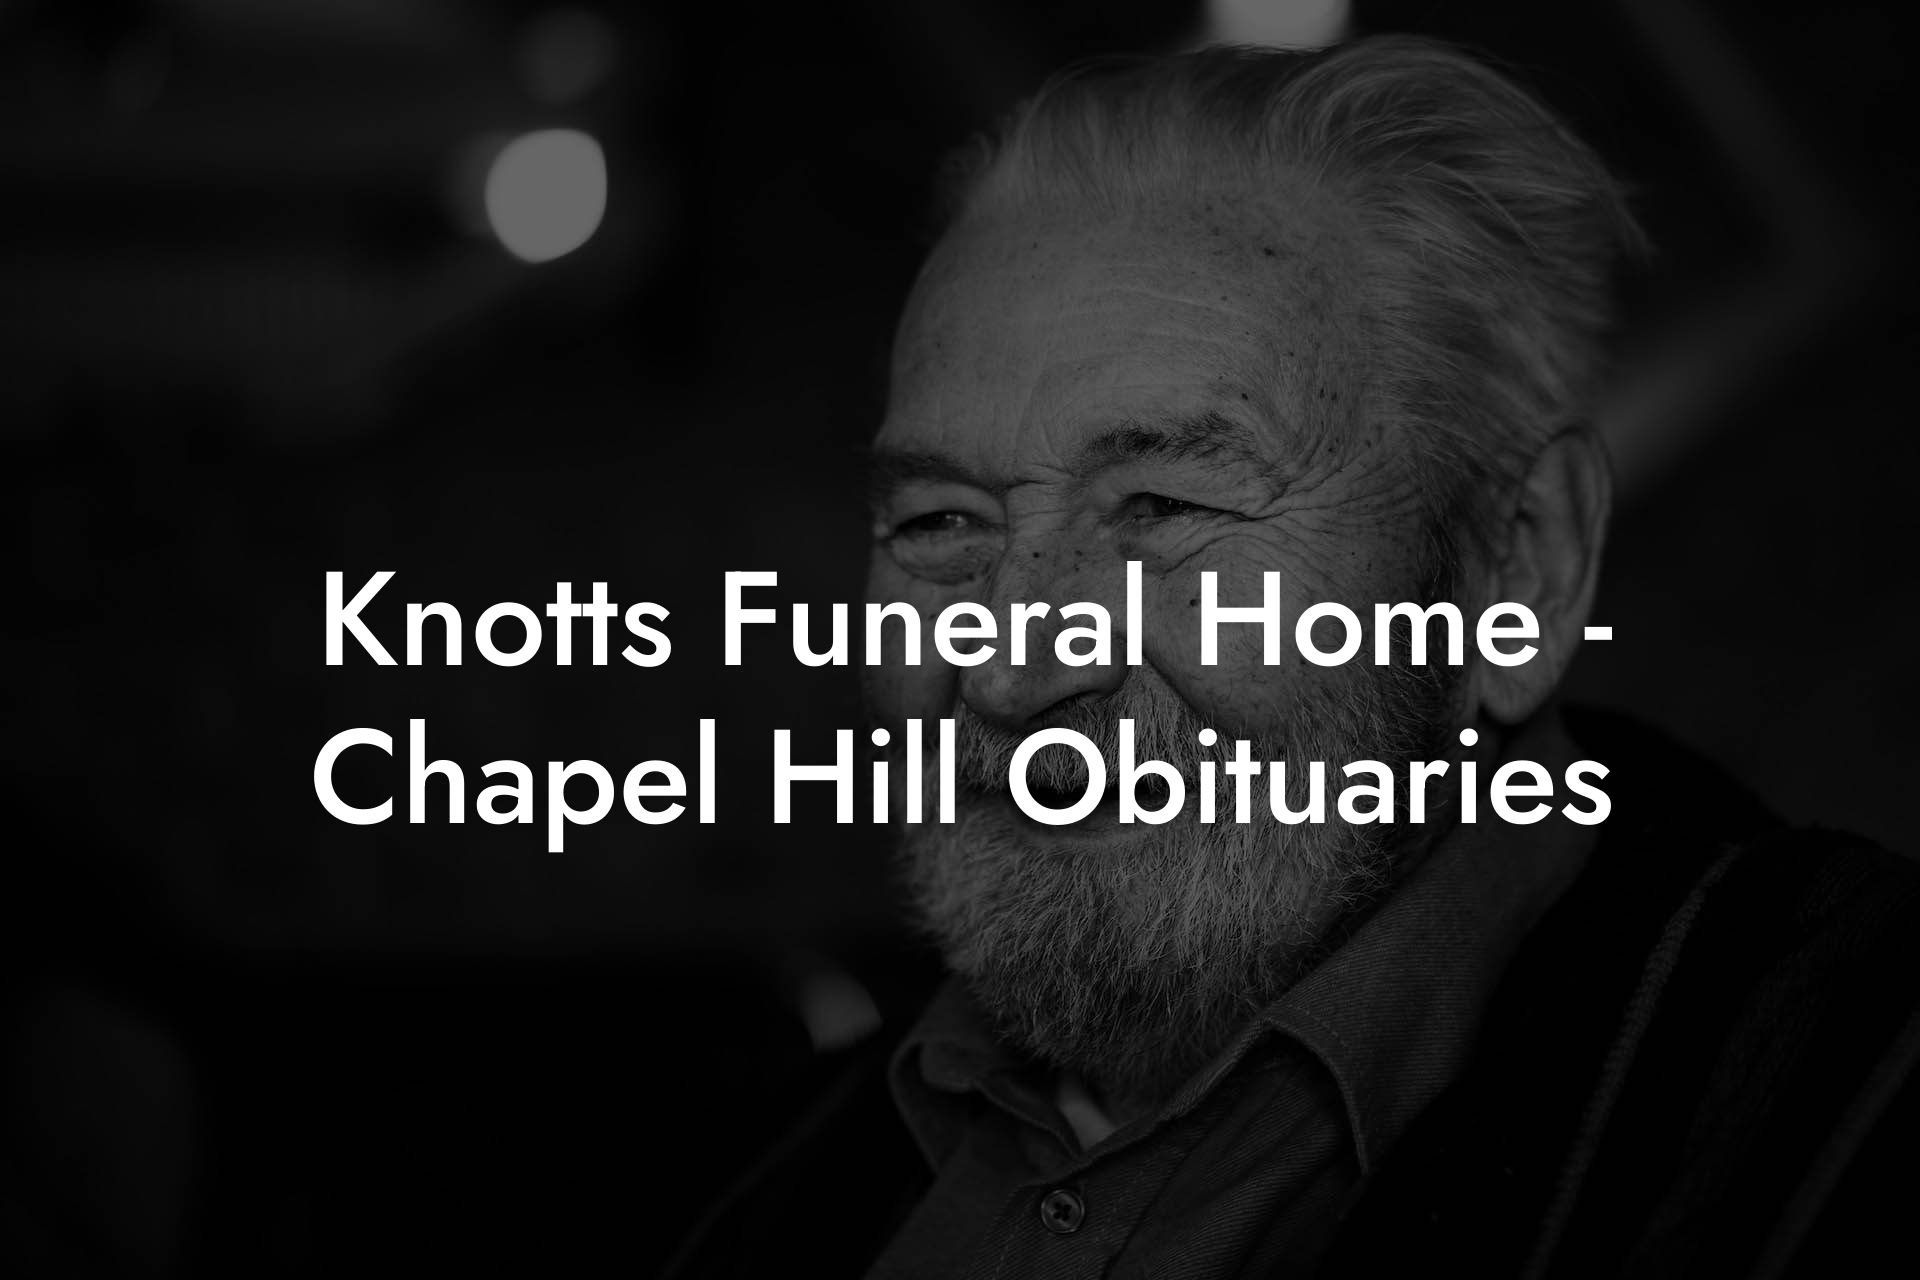 Knotts Funeral Home - Chapel Hill Obituaries